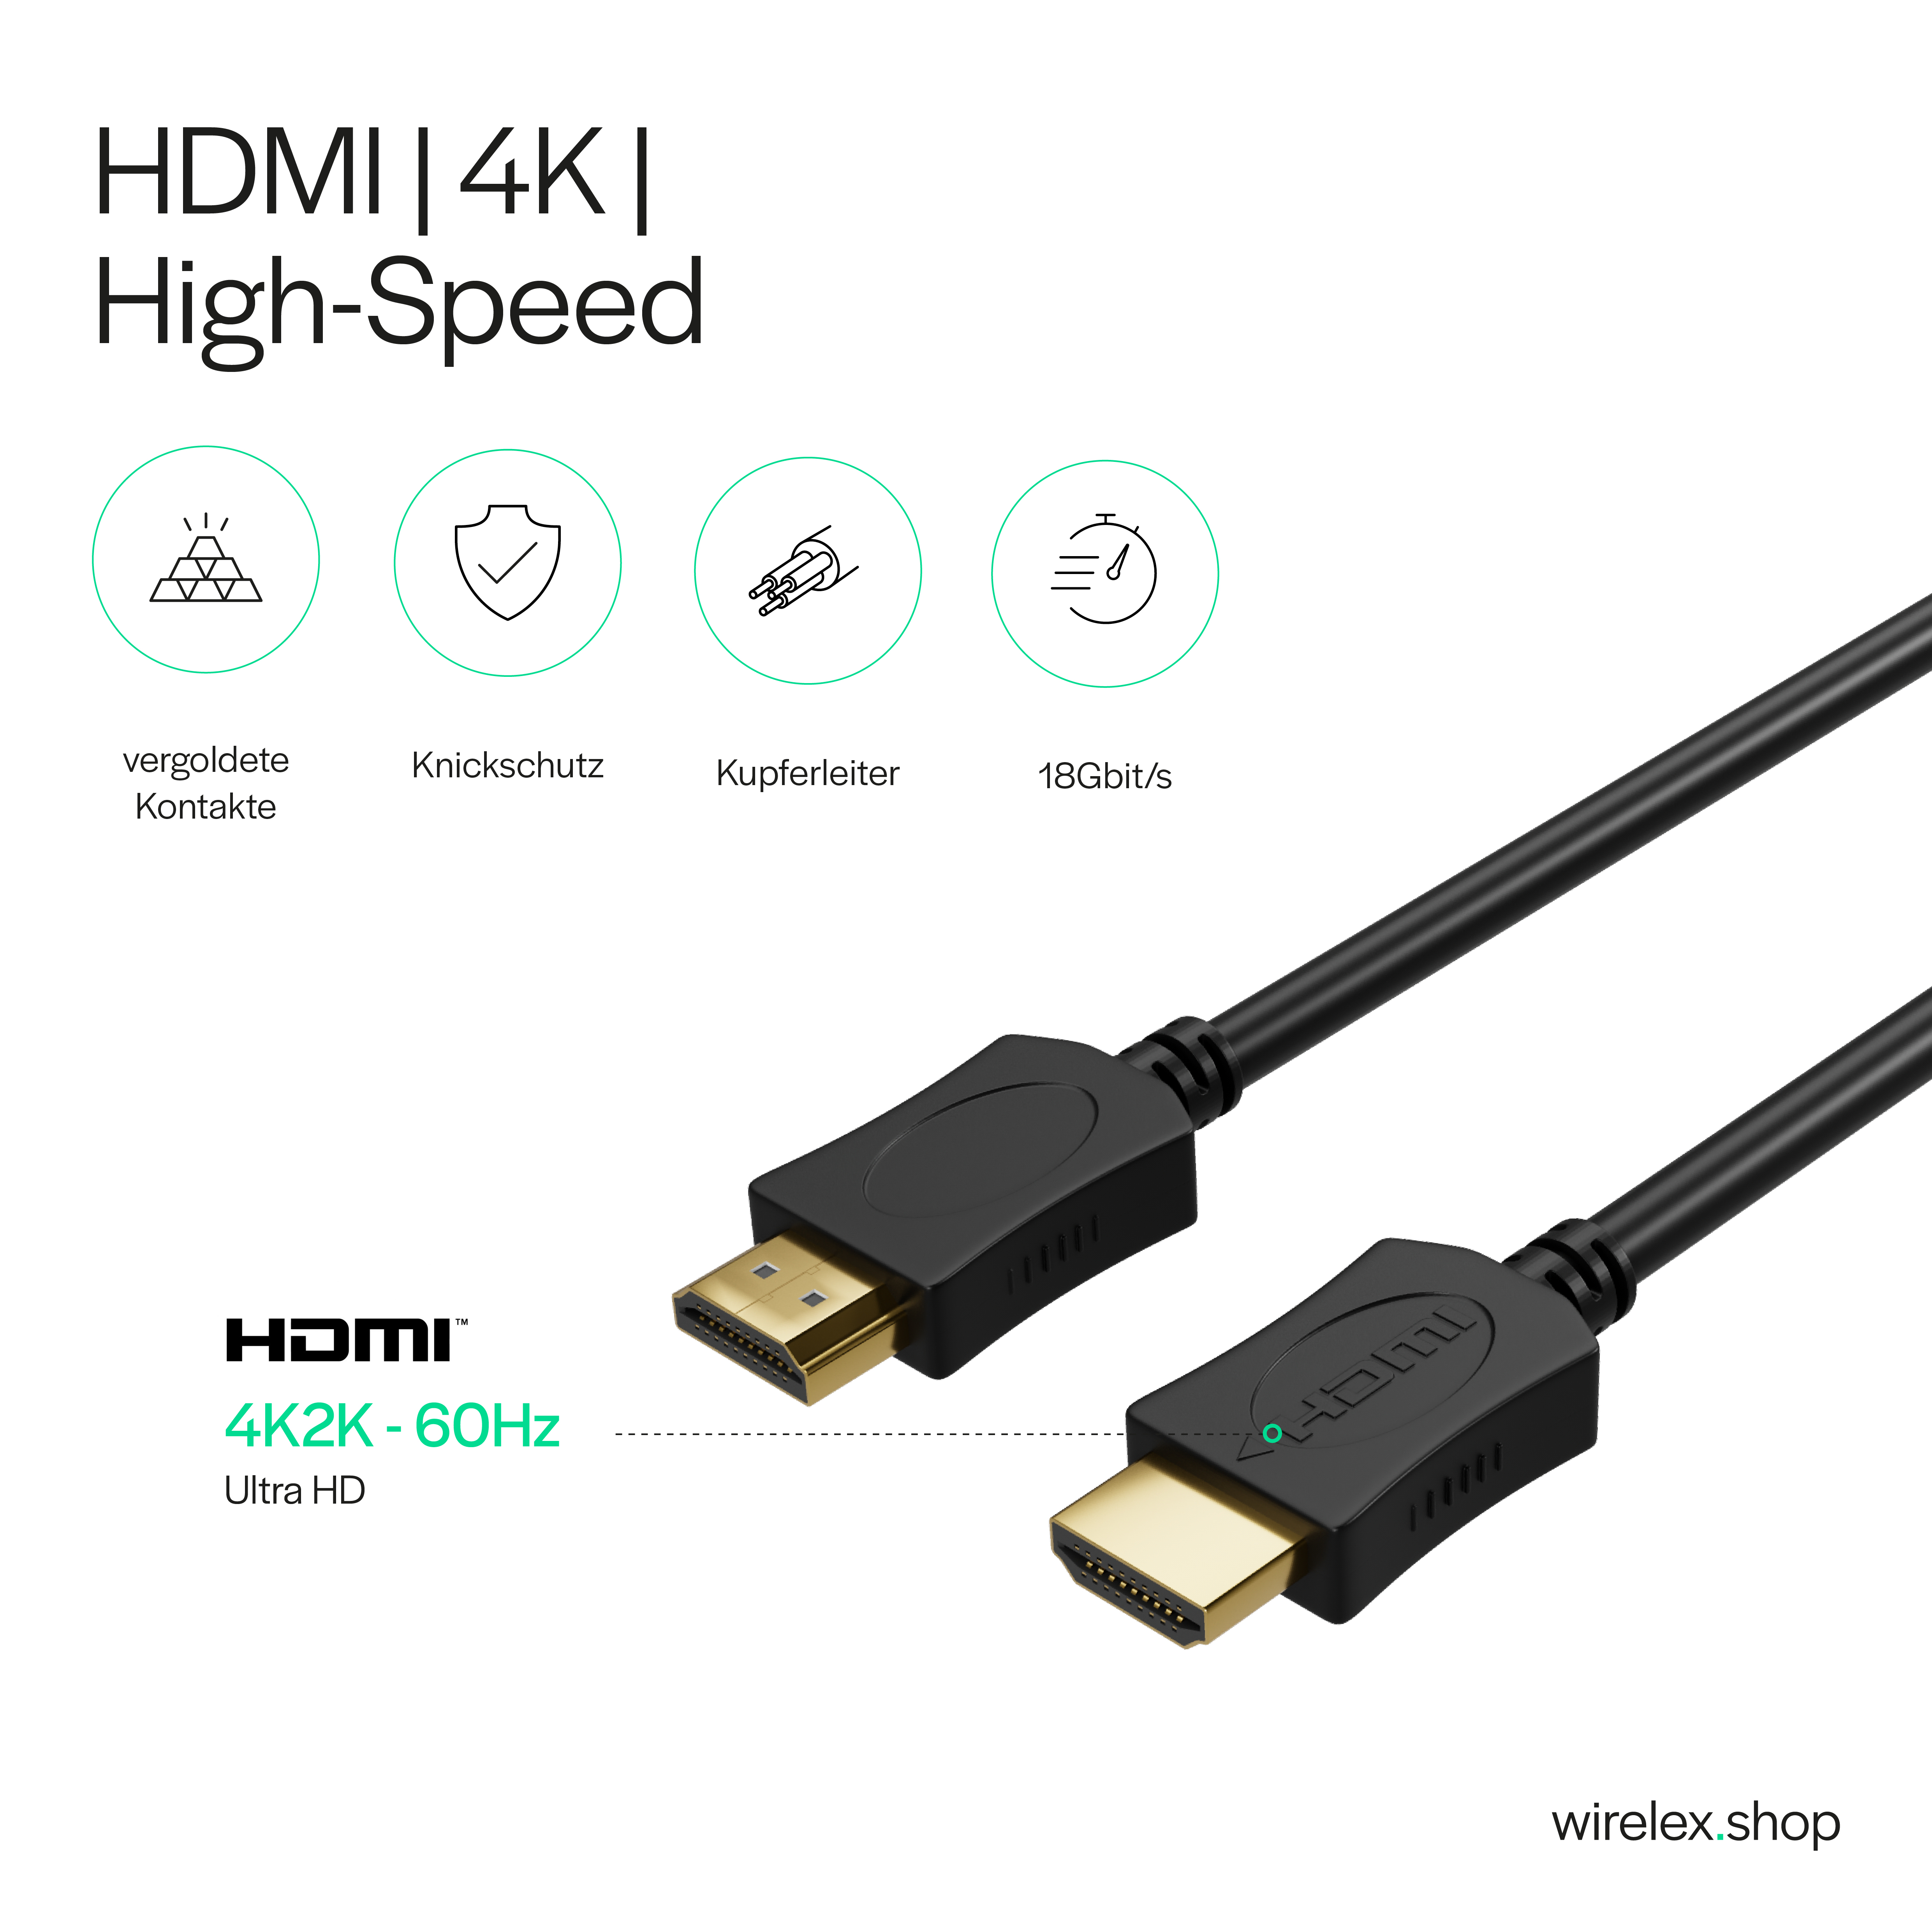 A-Stecker Kabel KABELBUDE HDMI verg. A-Stecker HEAC 20m / HDMI HDMI